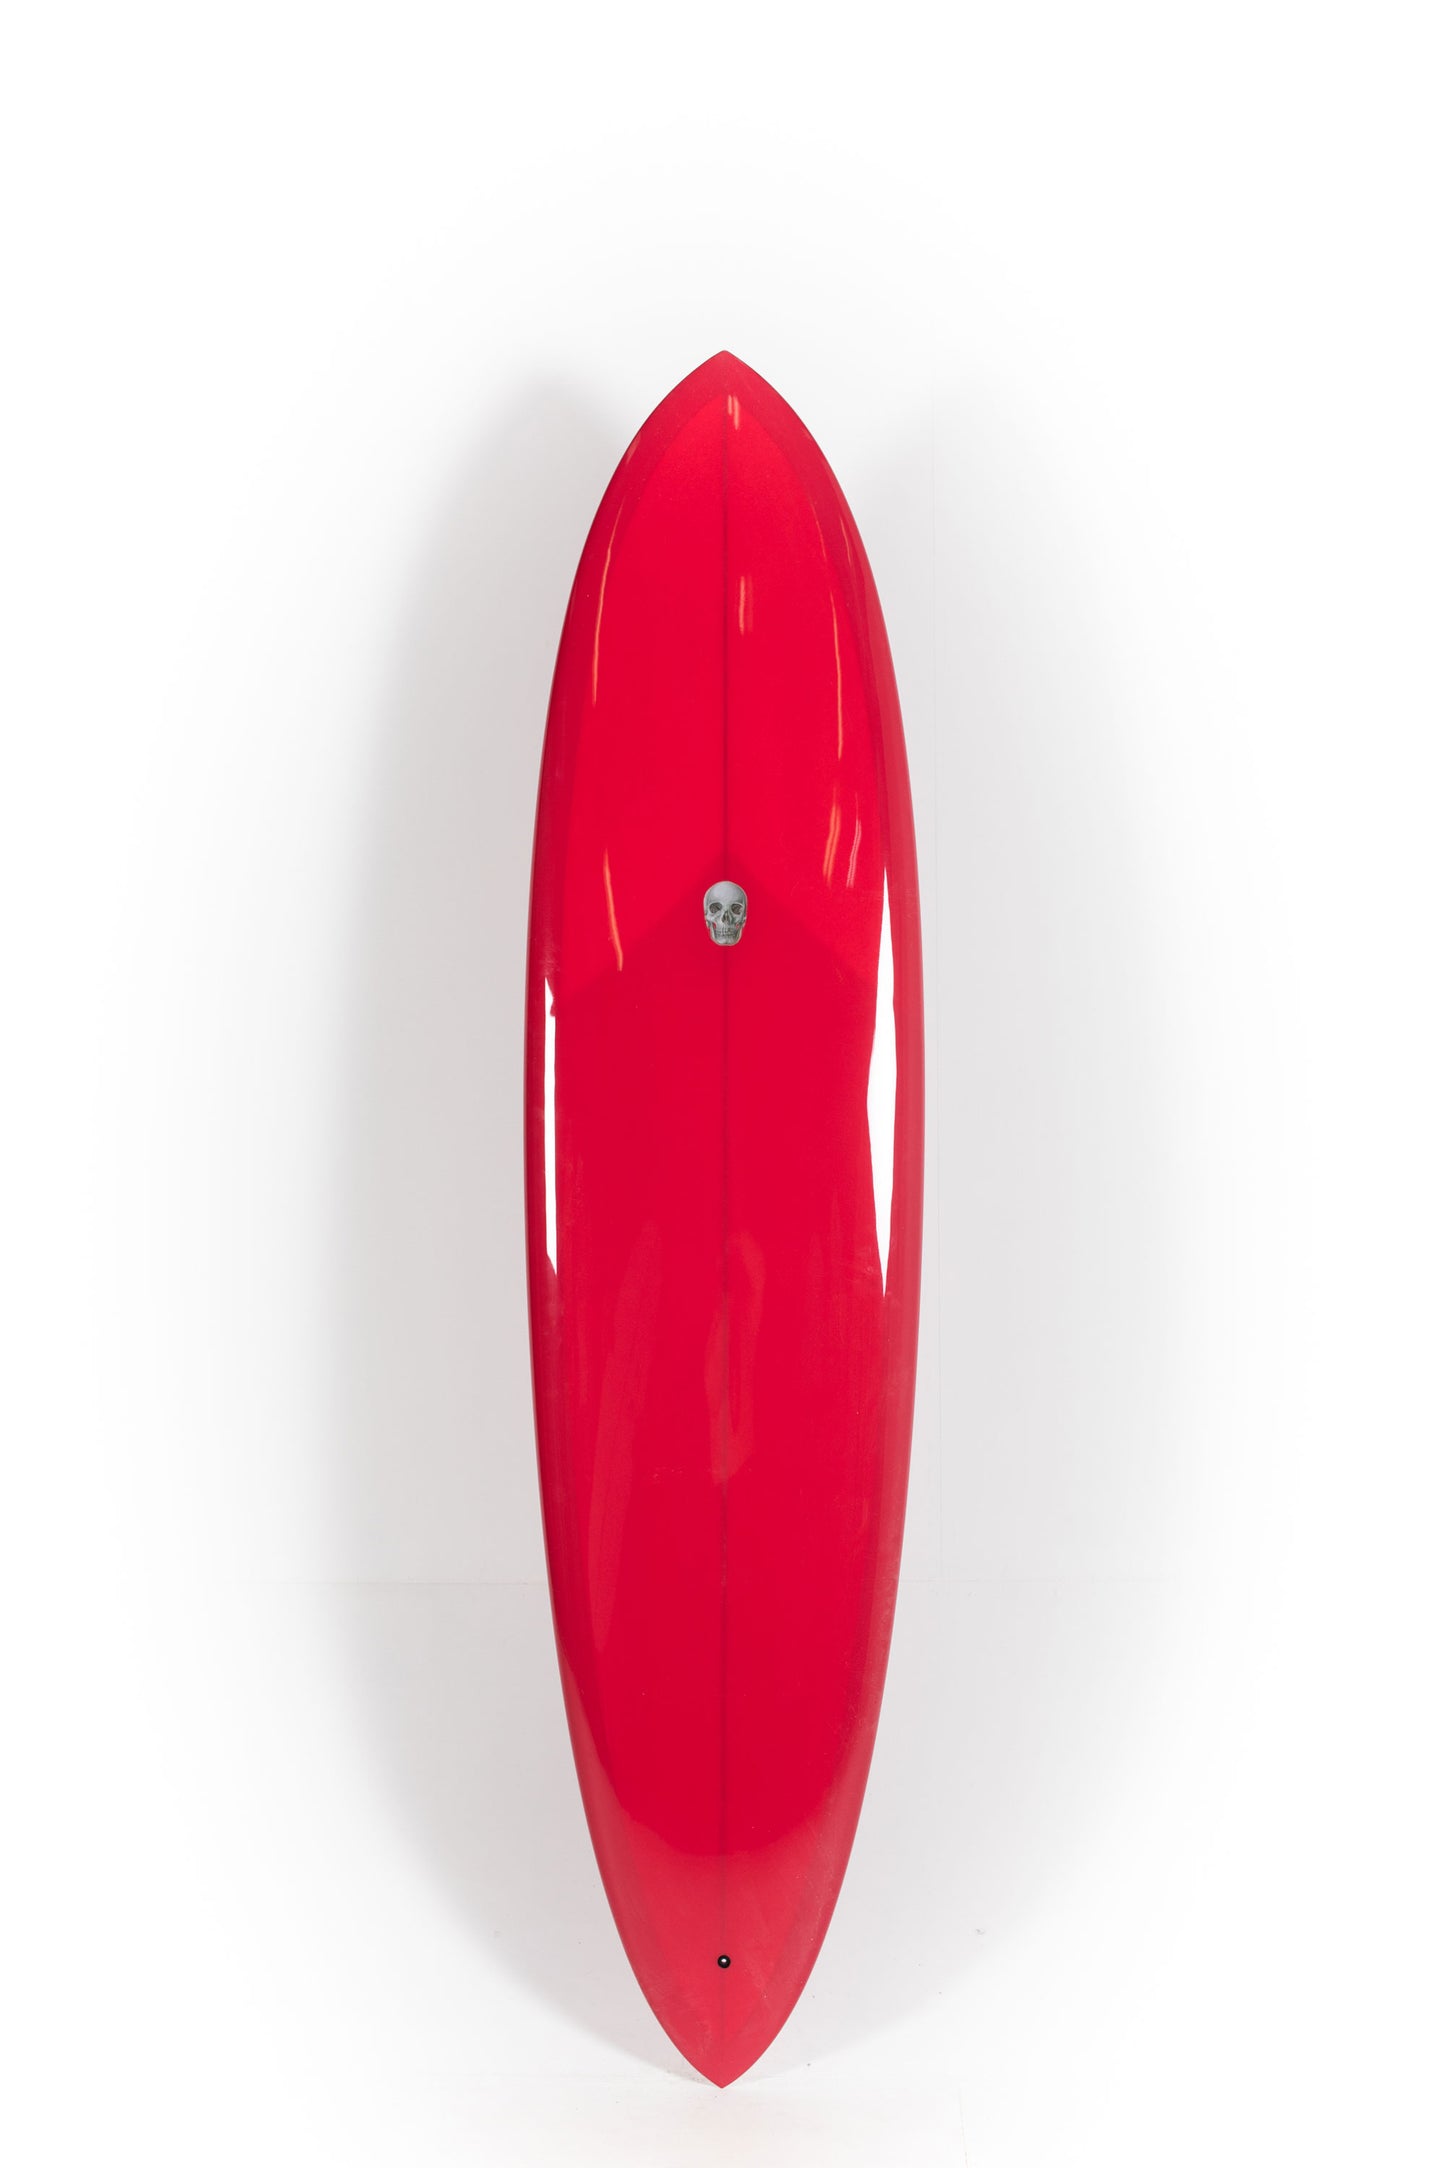 Pukas Surf Shop - Christenson Surfboards - C-BUCKET - 7'6" x 21 1/4 x 2 3/4 - CX05022